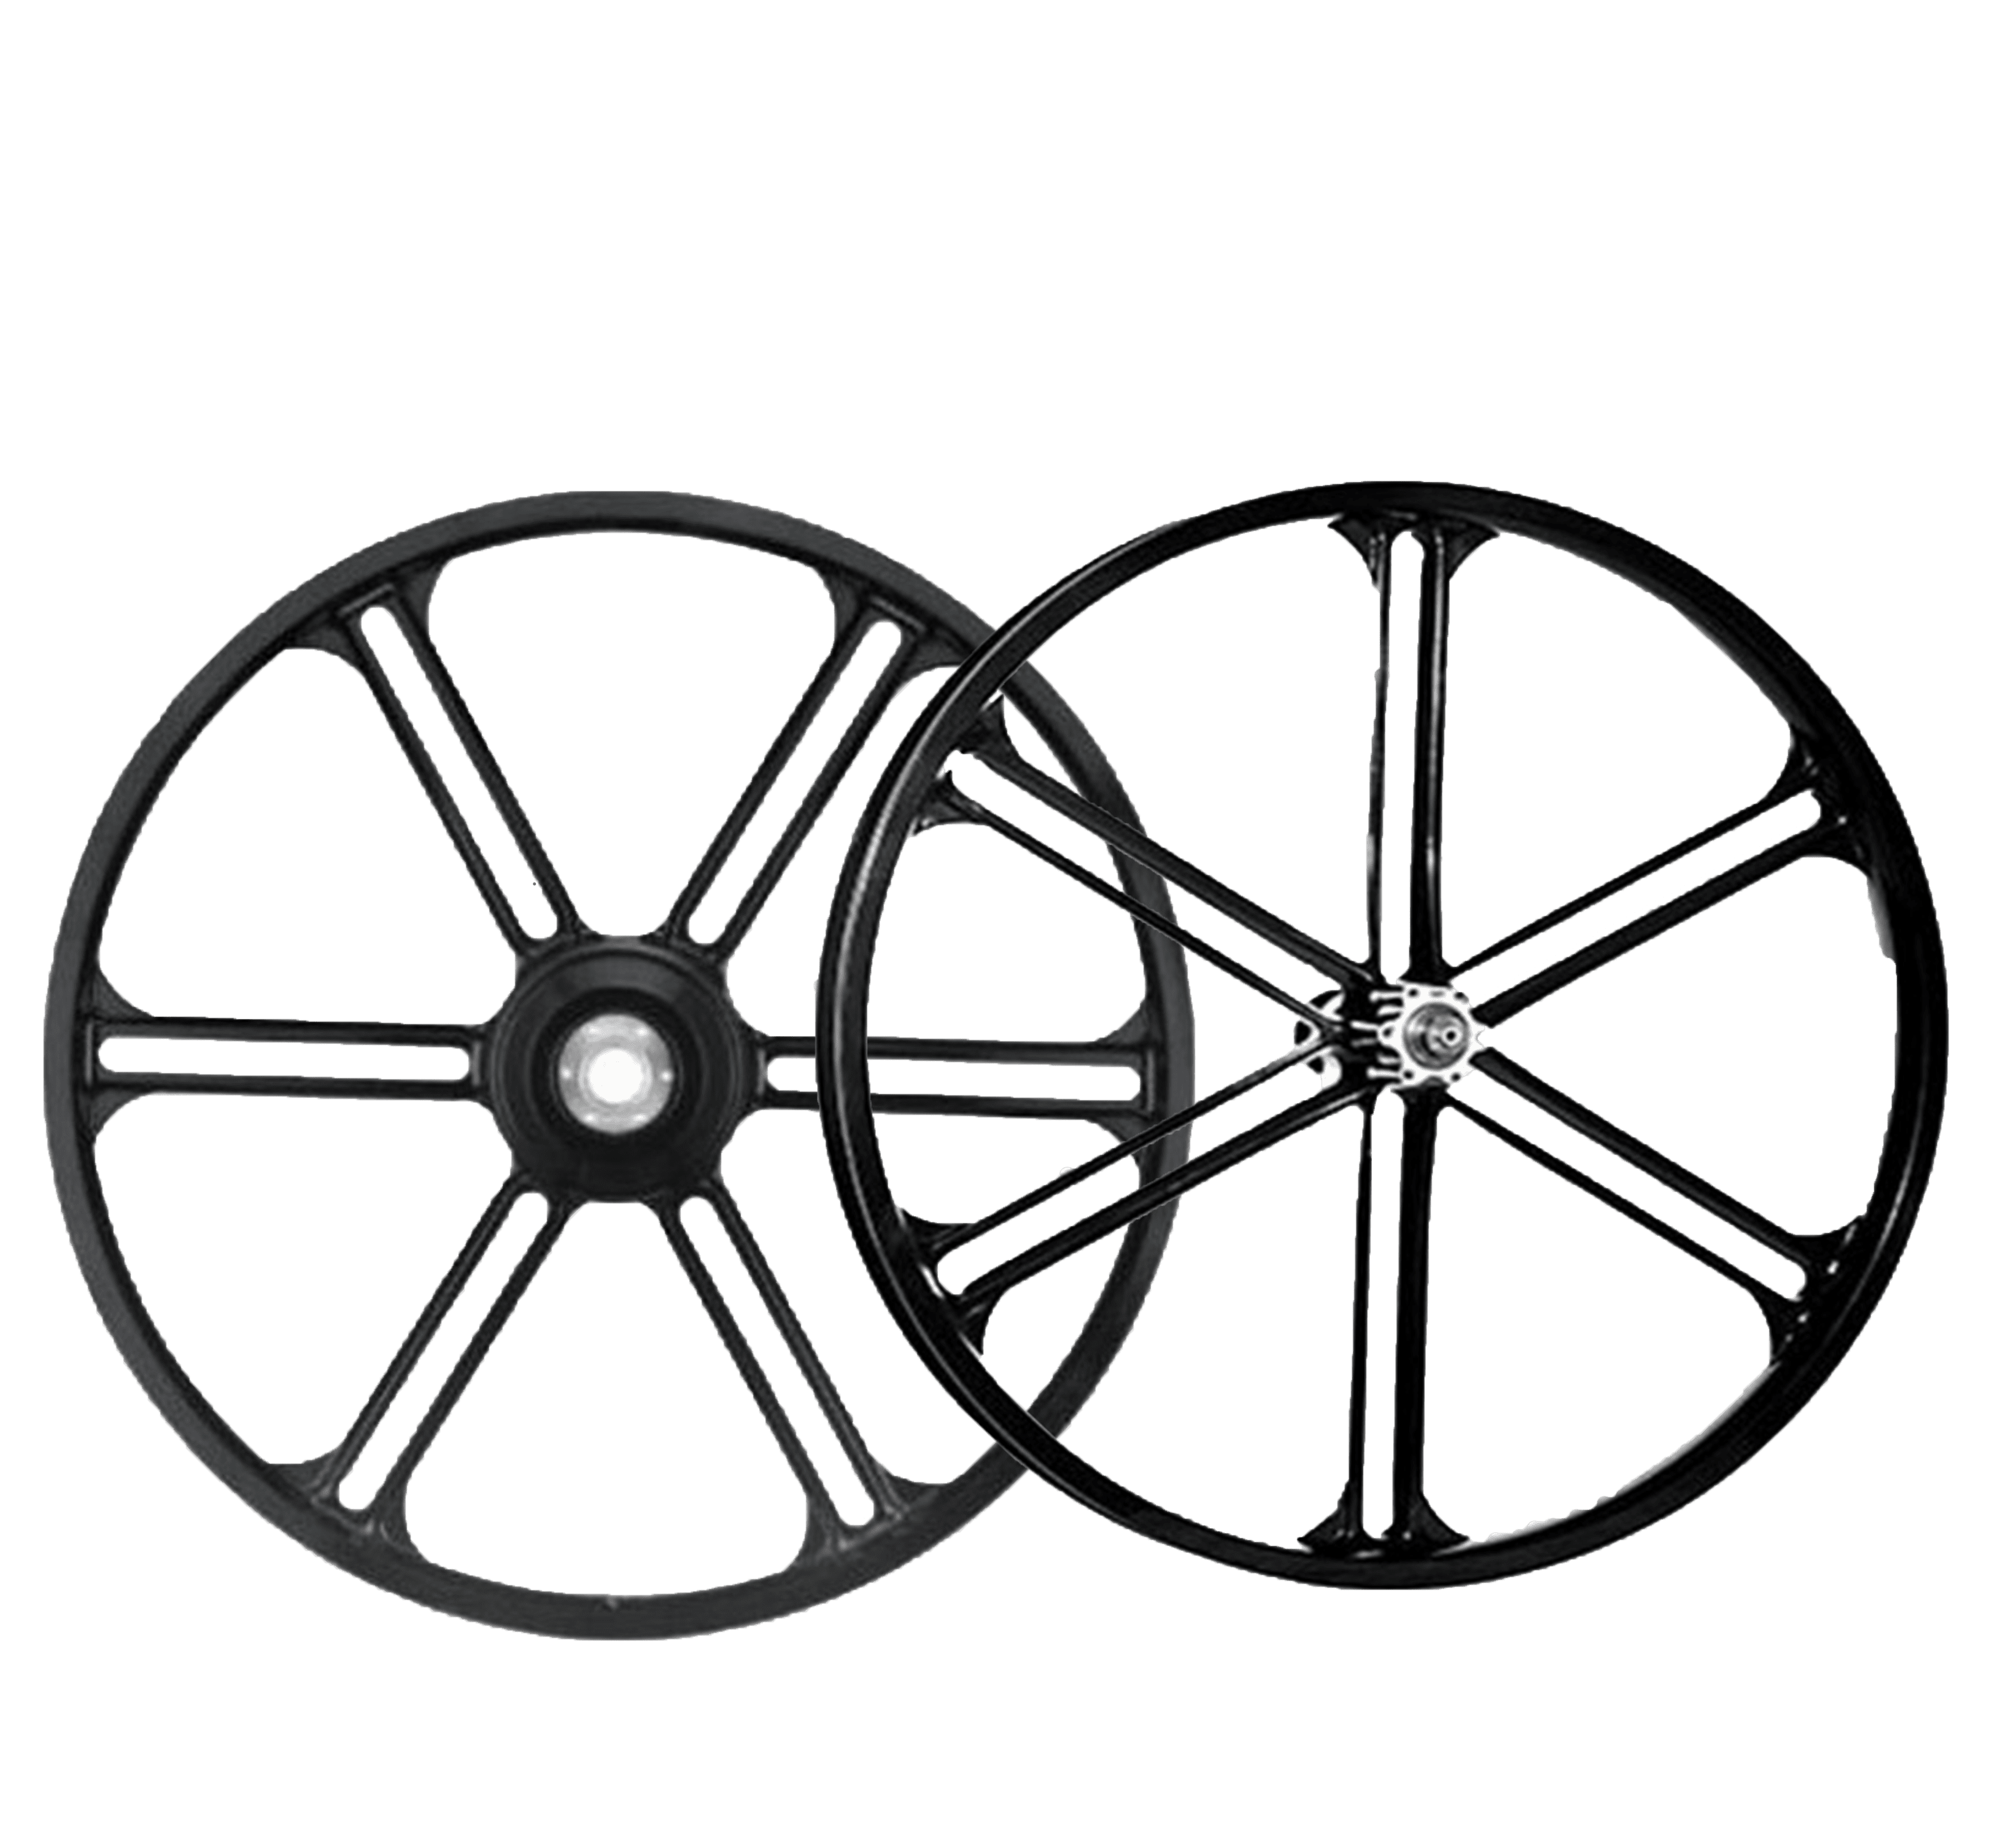 An Image containing Alloy Wheel